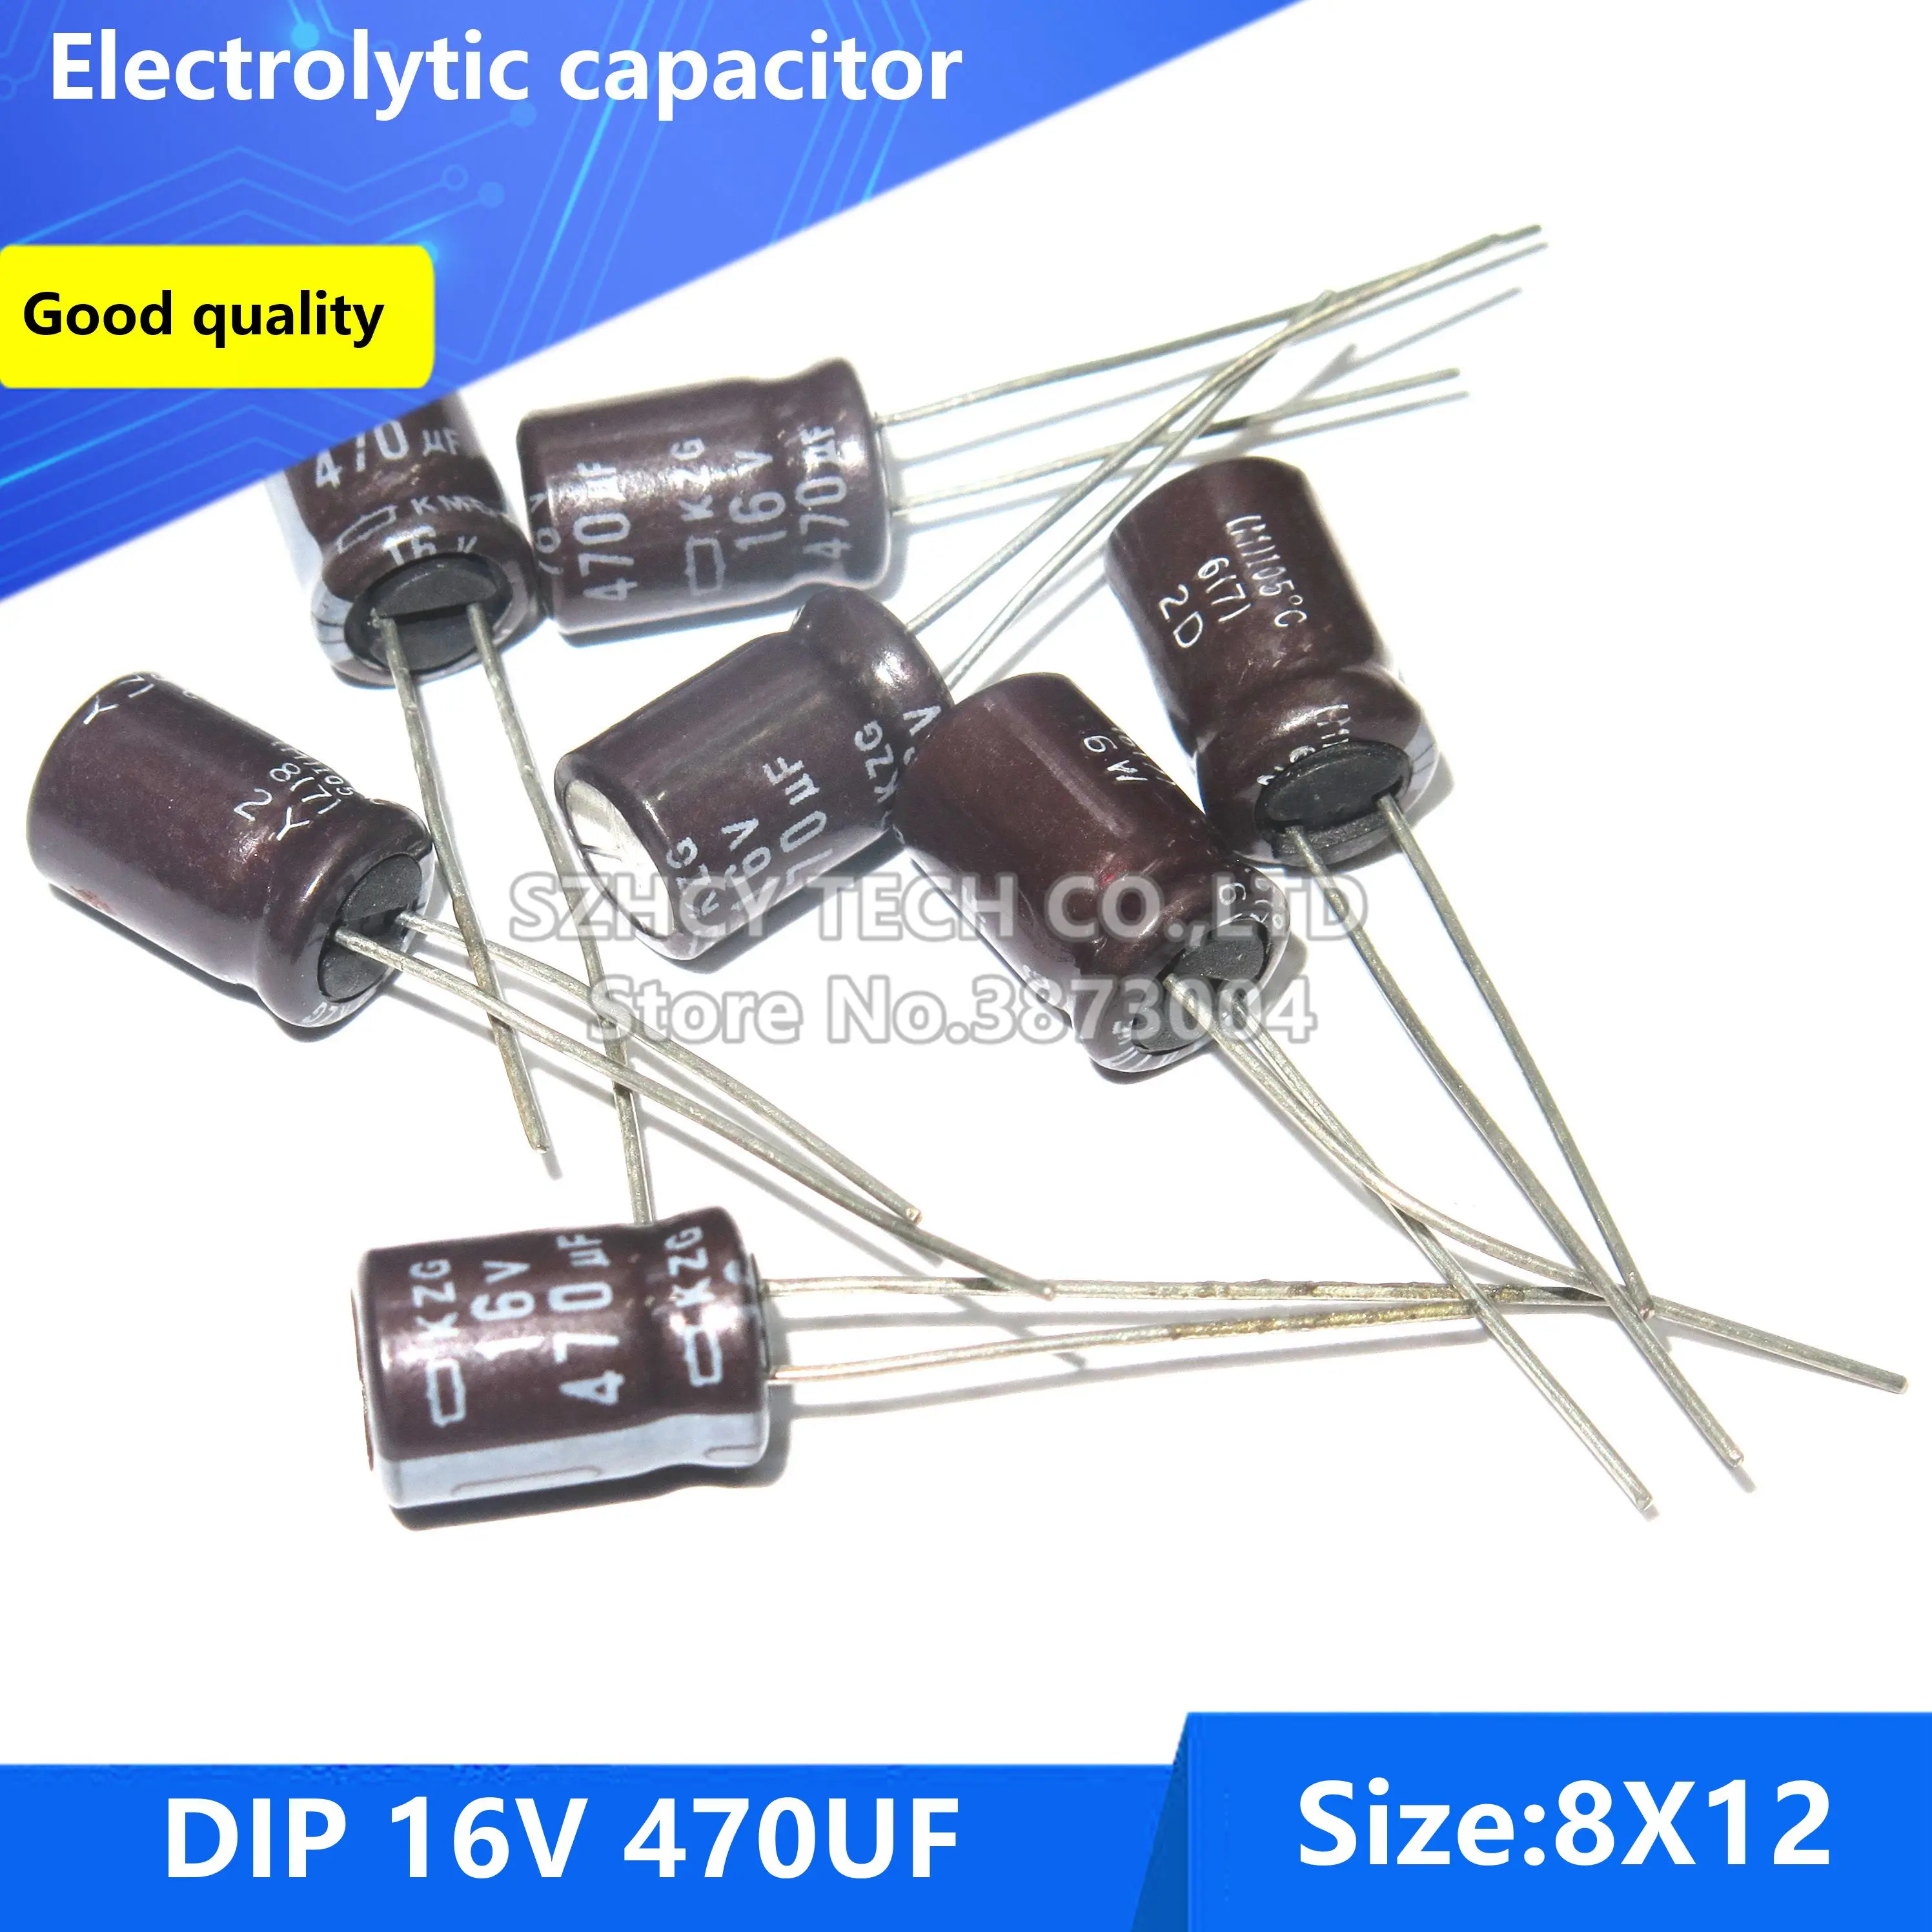 100pcs DIP 16V 470UF 812 Electrolytic capacitor